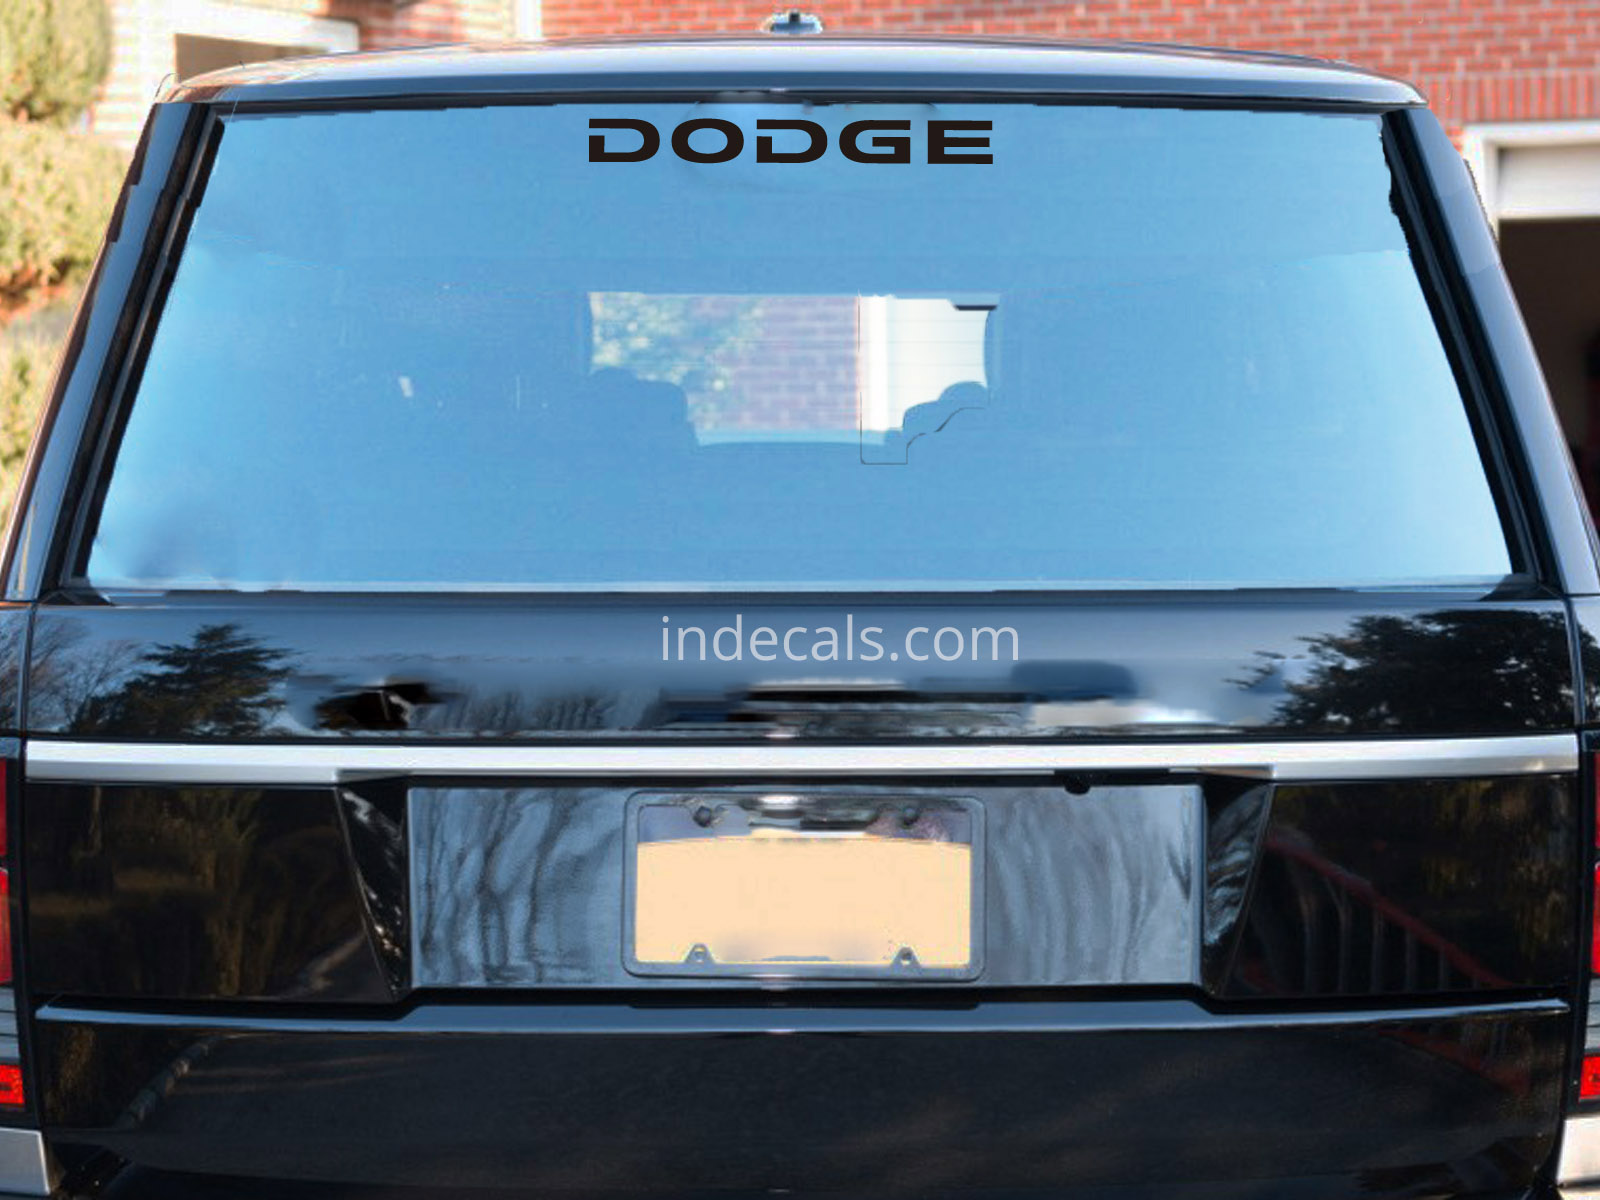 1 x Dodge Sticker for Windshield or Back Window - Black